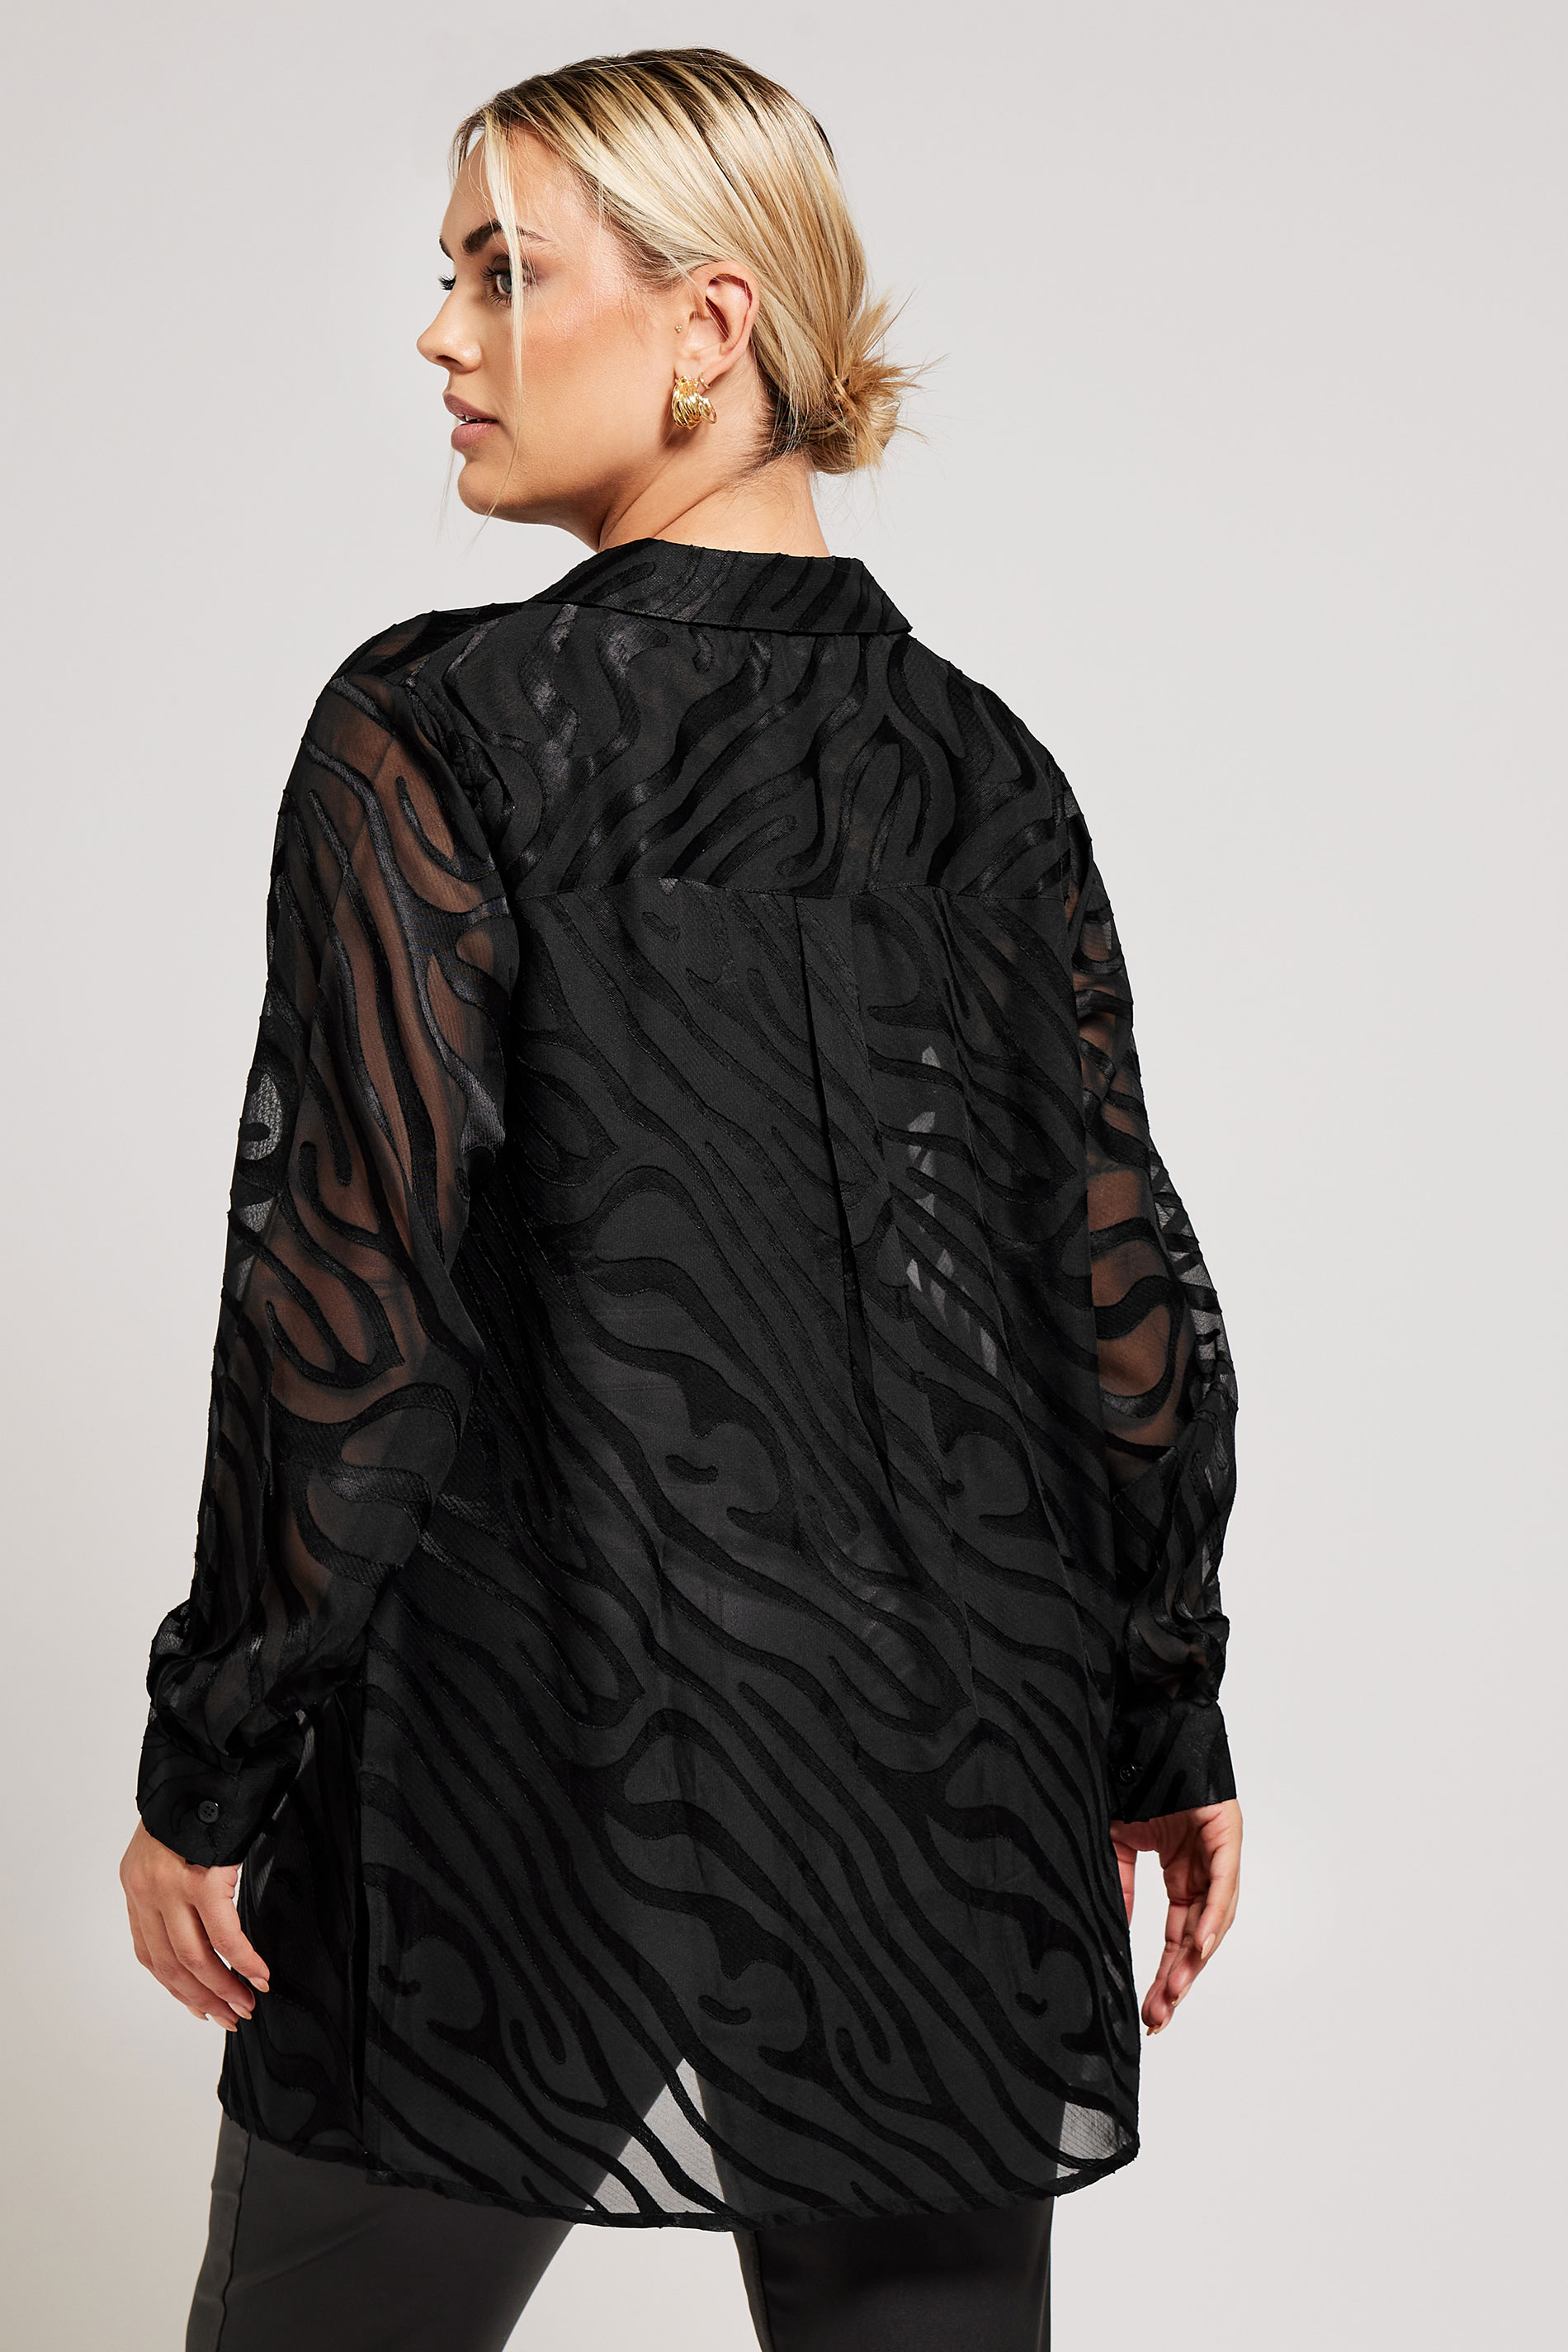 YOURS LONDON Plus Size Black Zebra Print Mesh Shirt | Yours Clothing 3